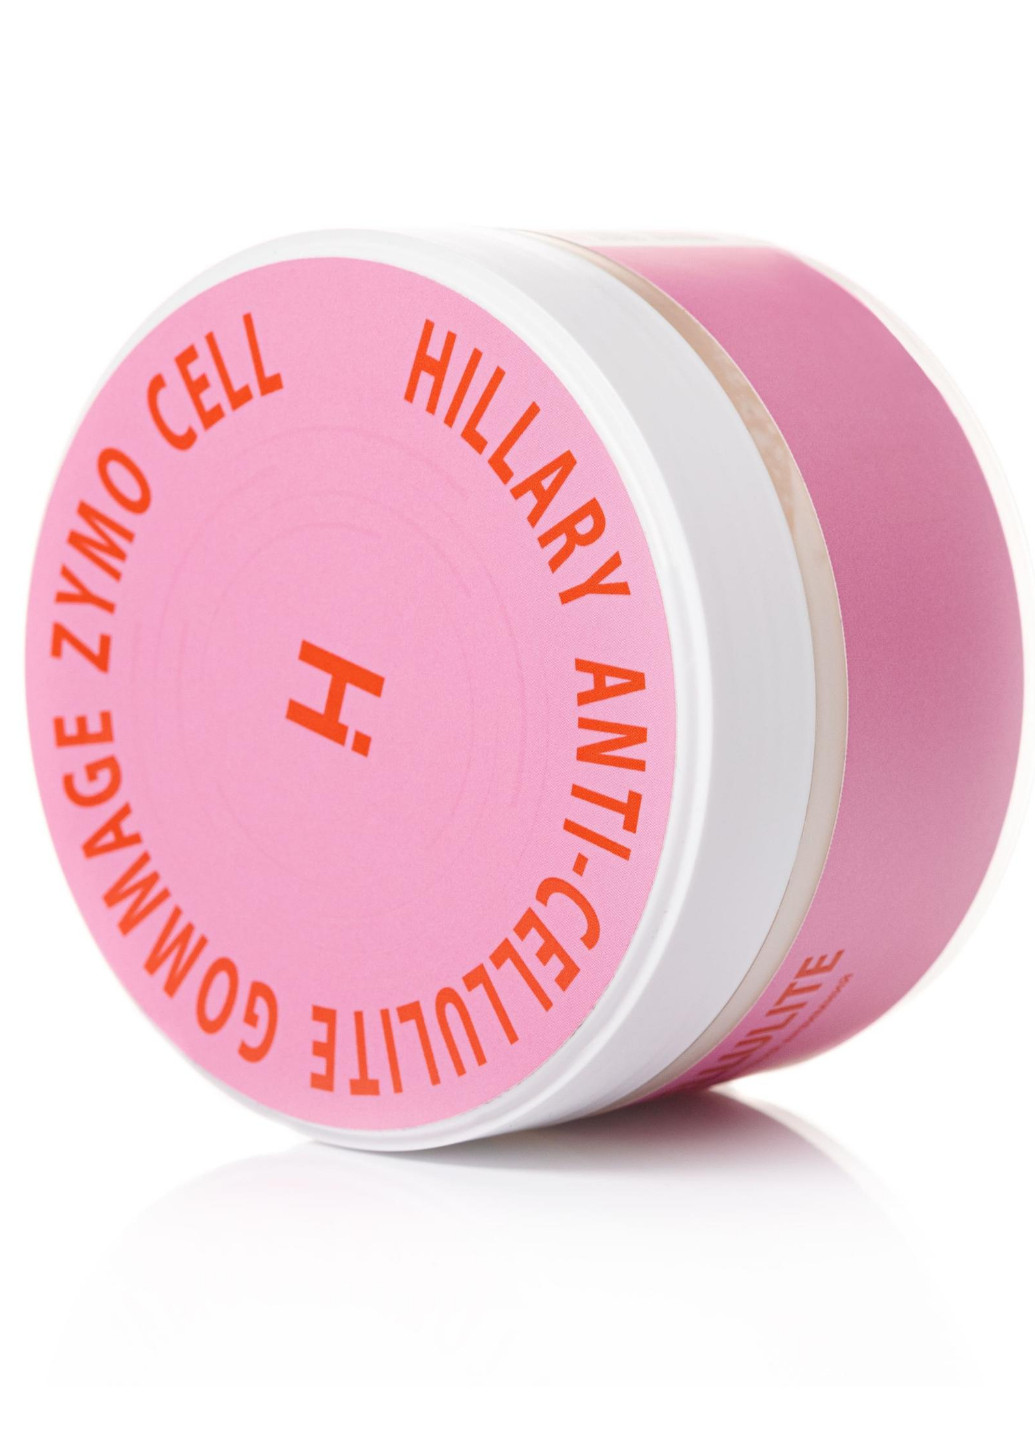 Антицелюлітний ензимний гоммаж Anti-cellulite Gommage Zymo Cell, 200 мл Hillary (254016376)